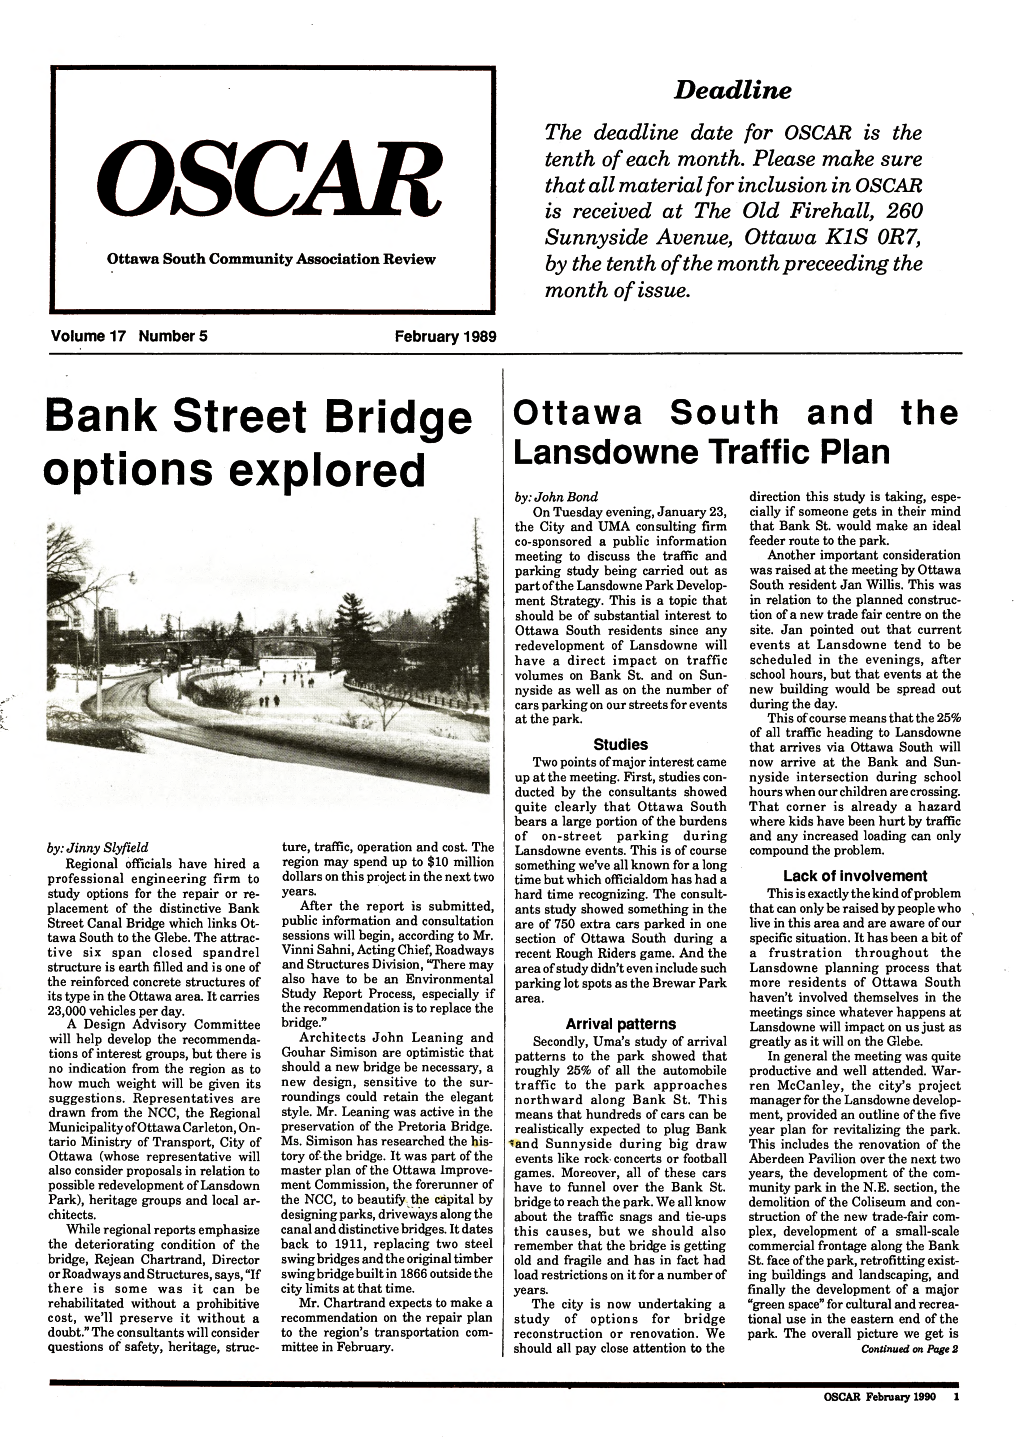 Bank Street Bridge Options Explored